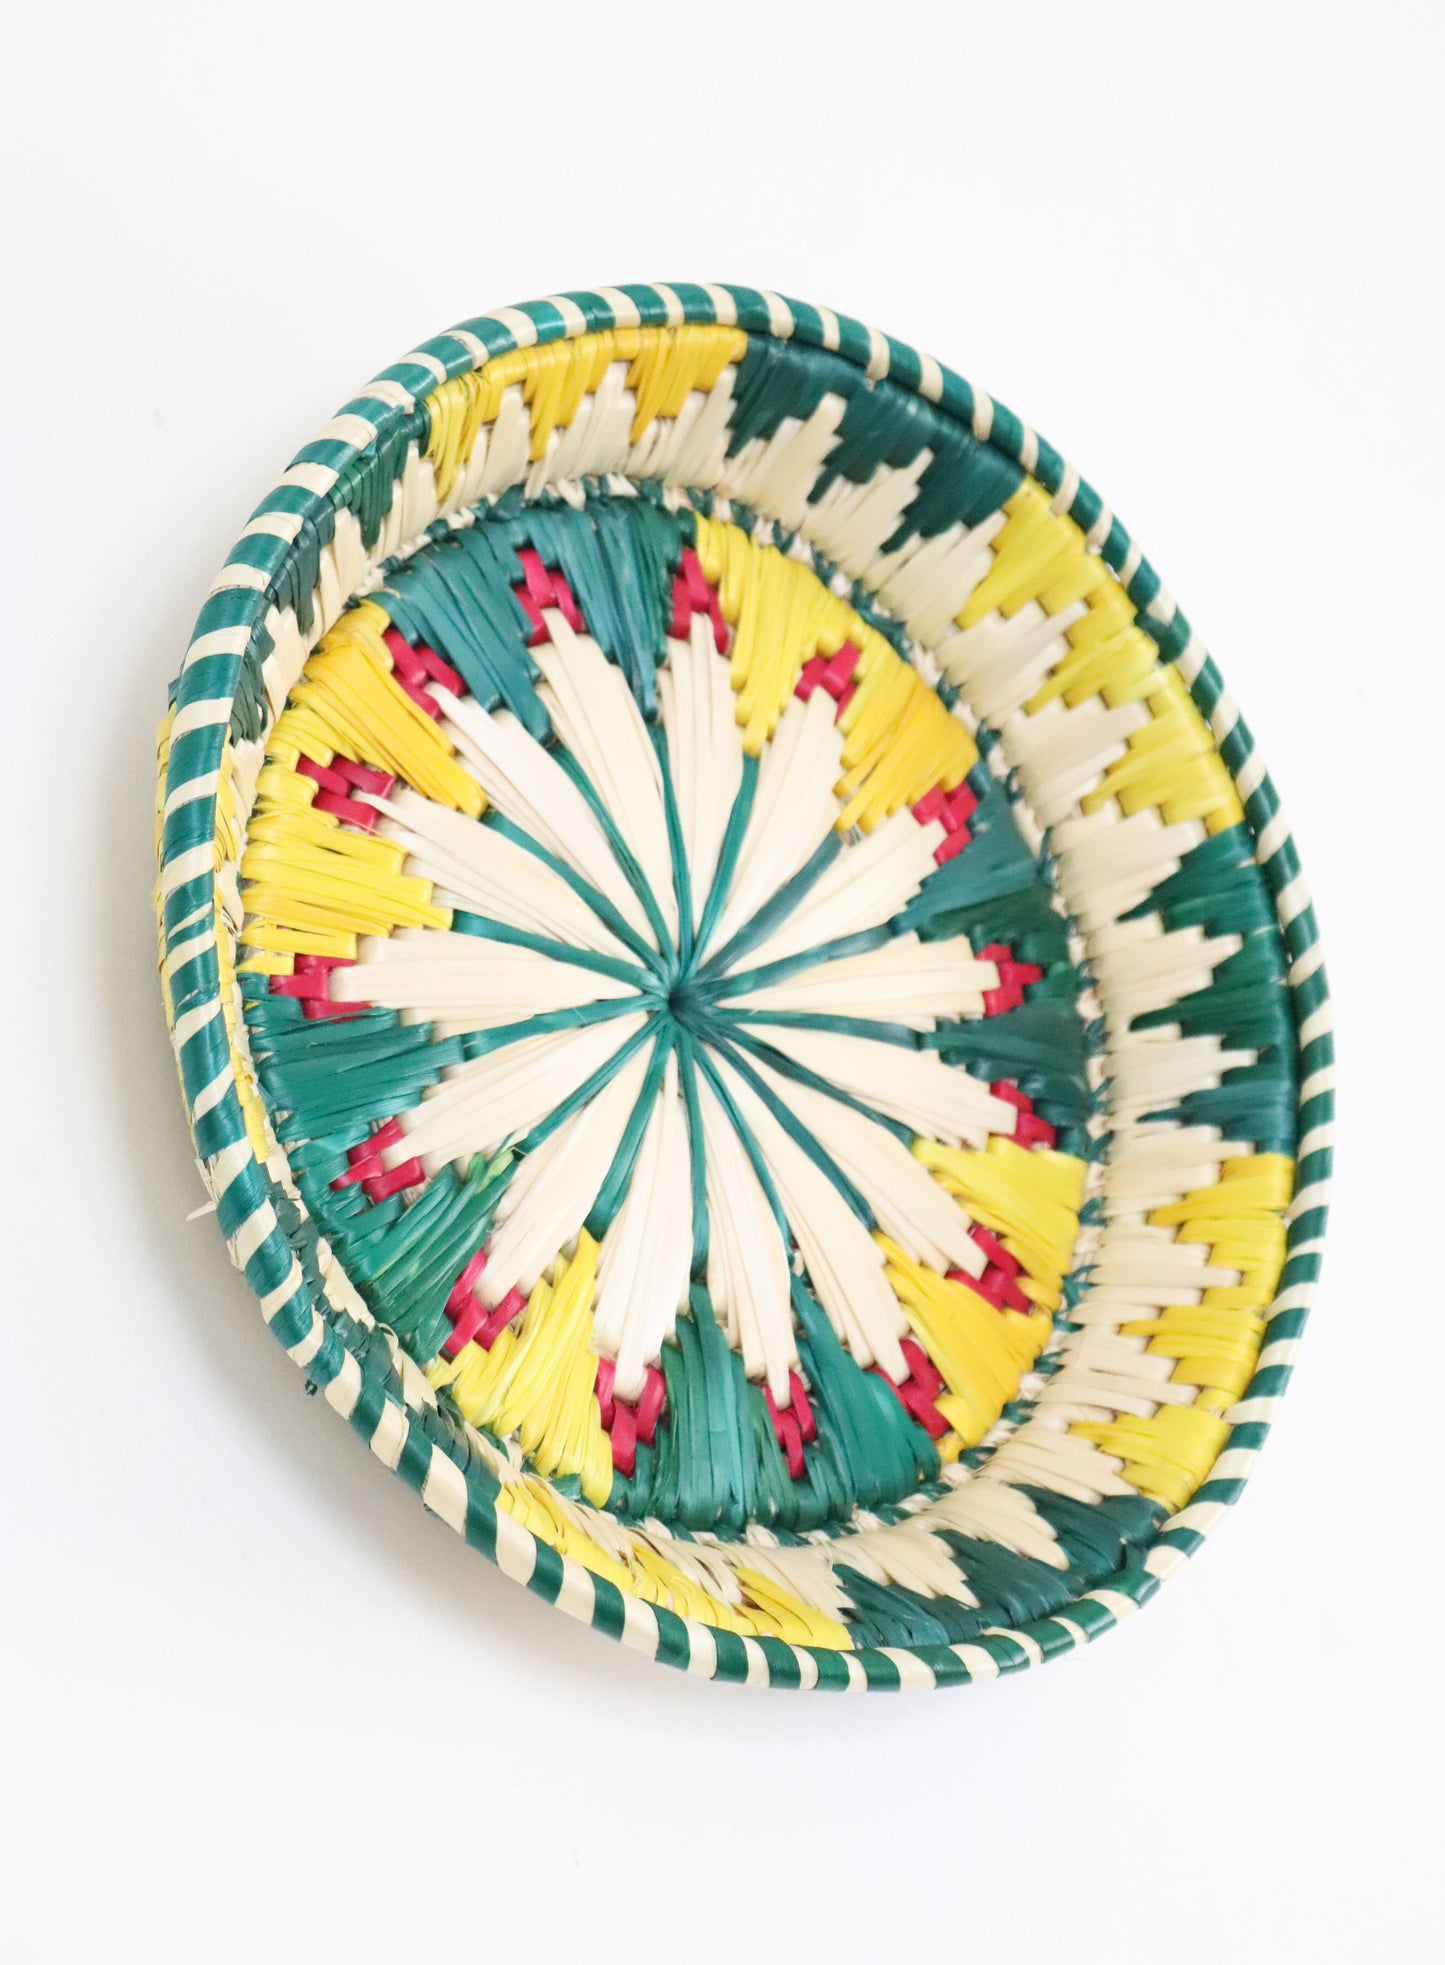 Decorative wall basket - Moonj grass basket - Wall basket for decor - Handwoven grass basket